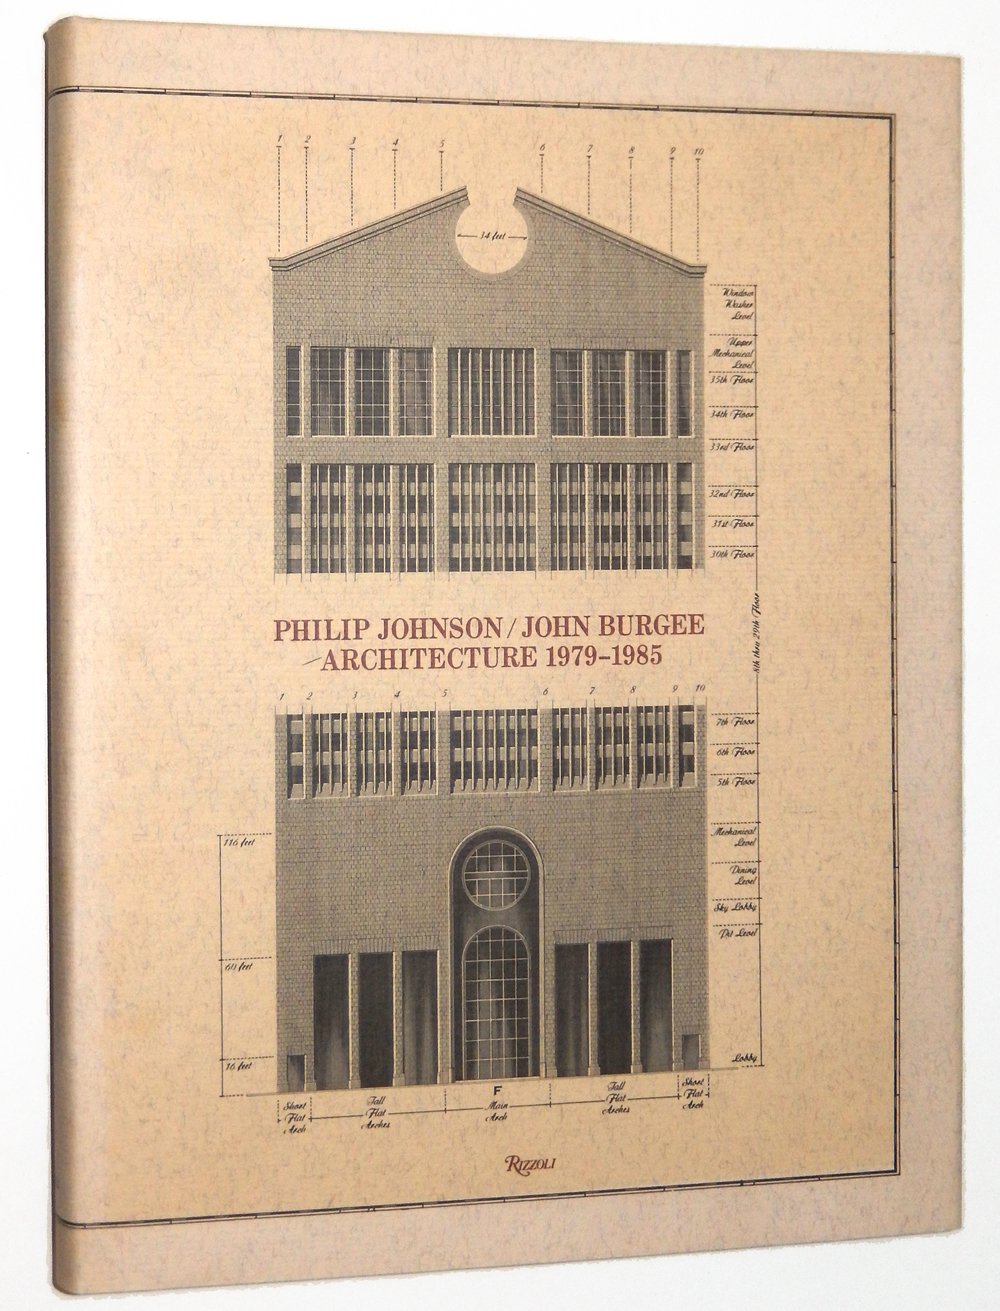 Philip Johnson/John Burgee Architecture 1979-1985